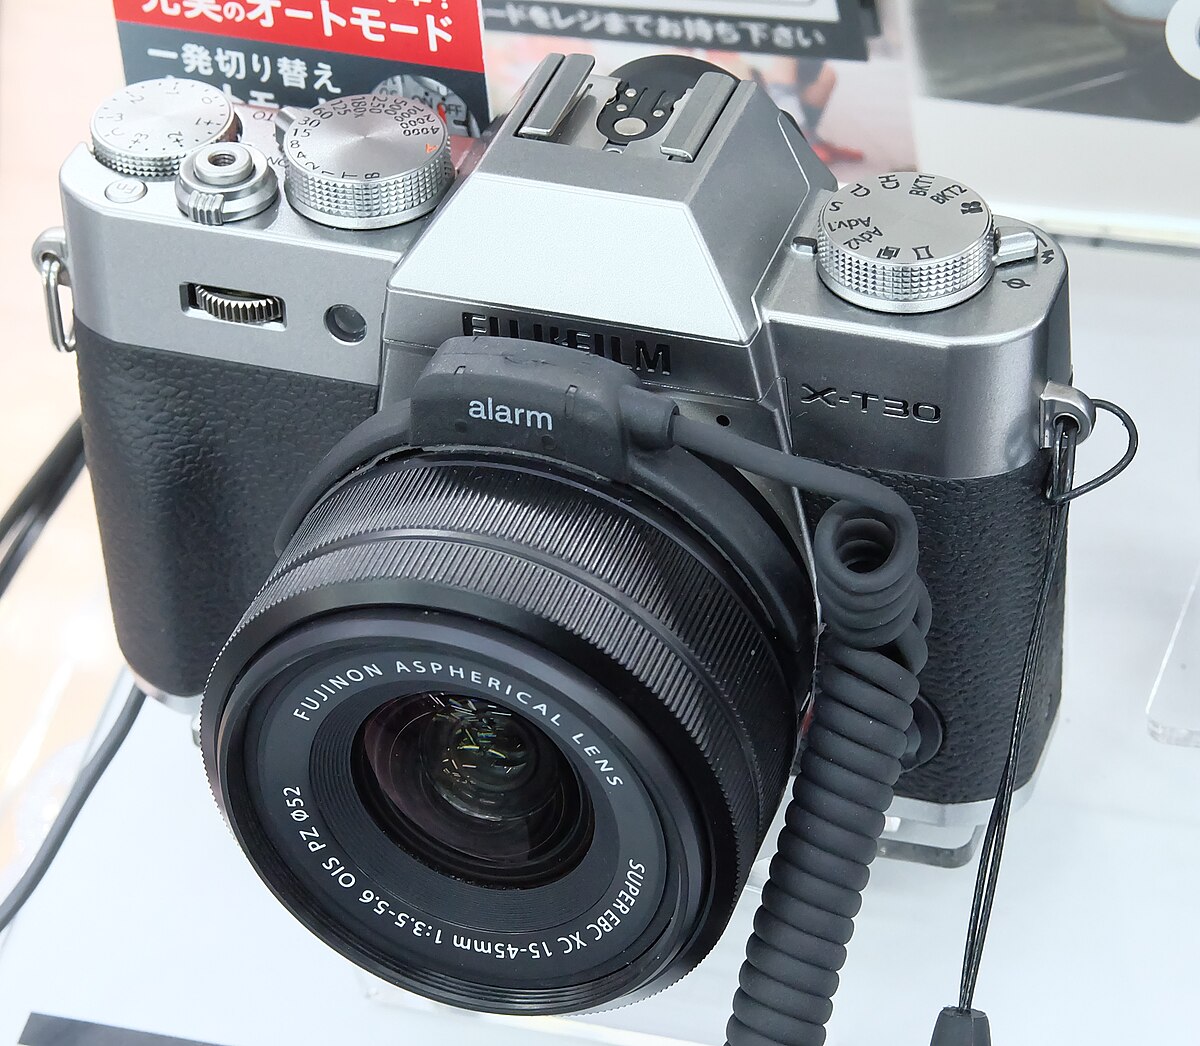 Fujifilm X-T30 II - Wikipedia